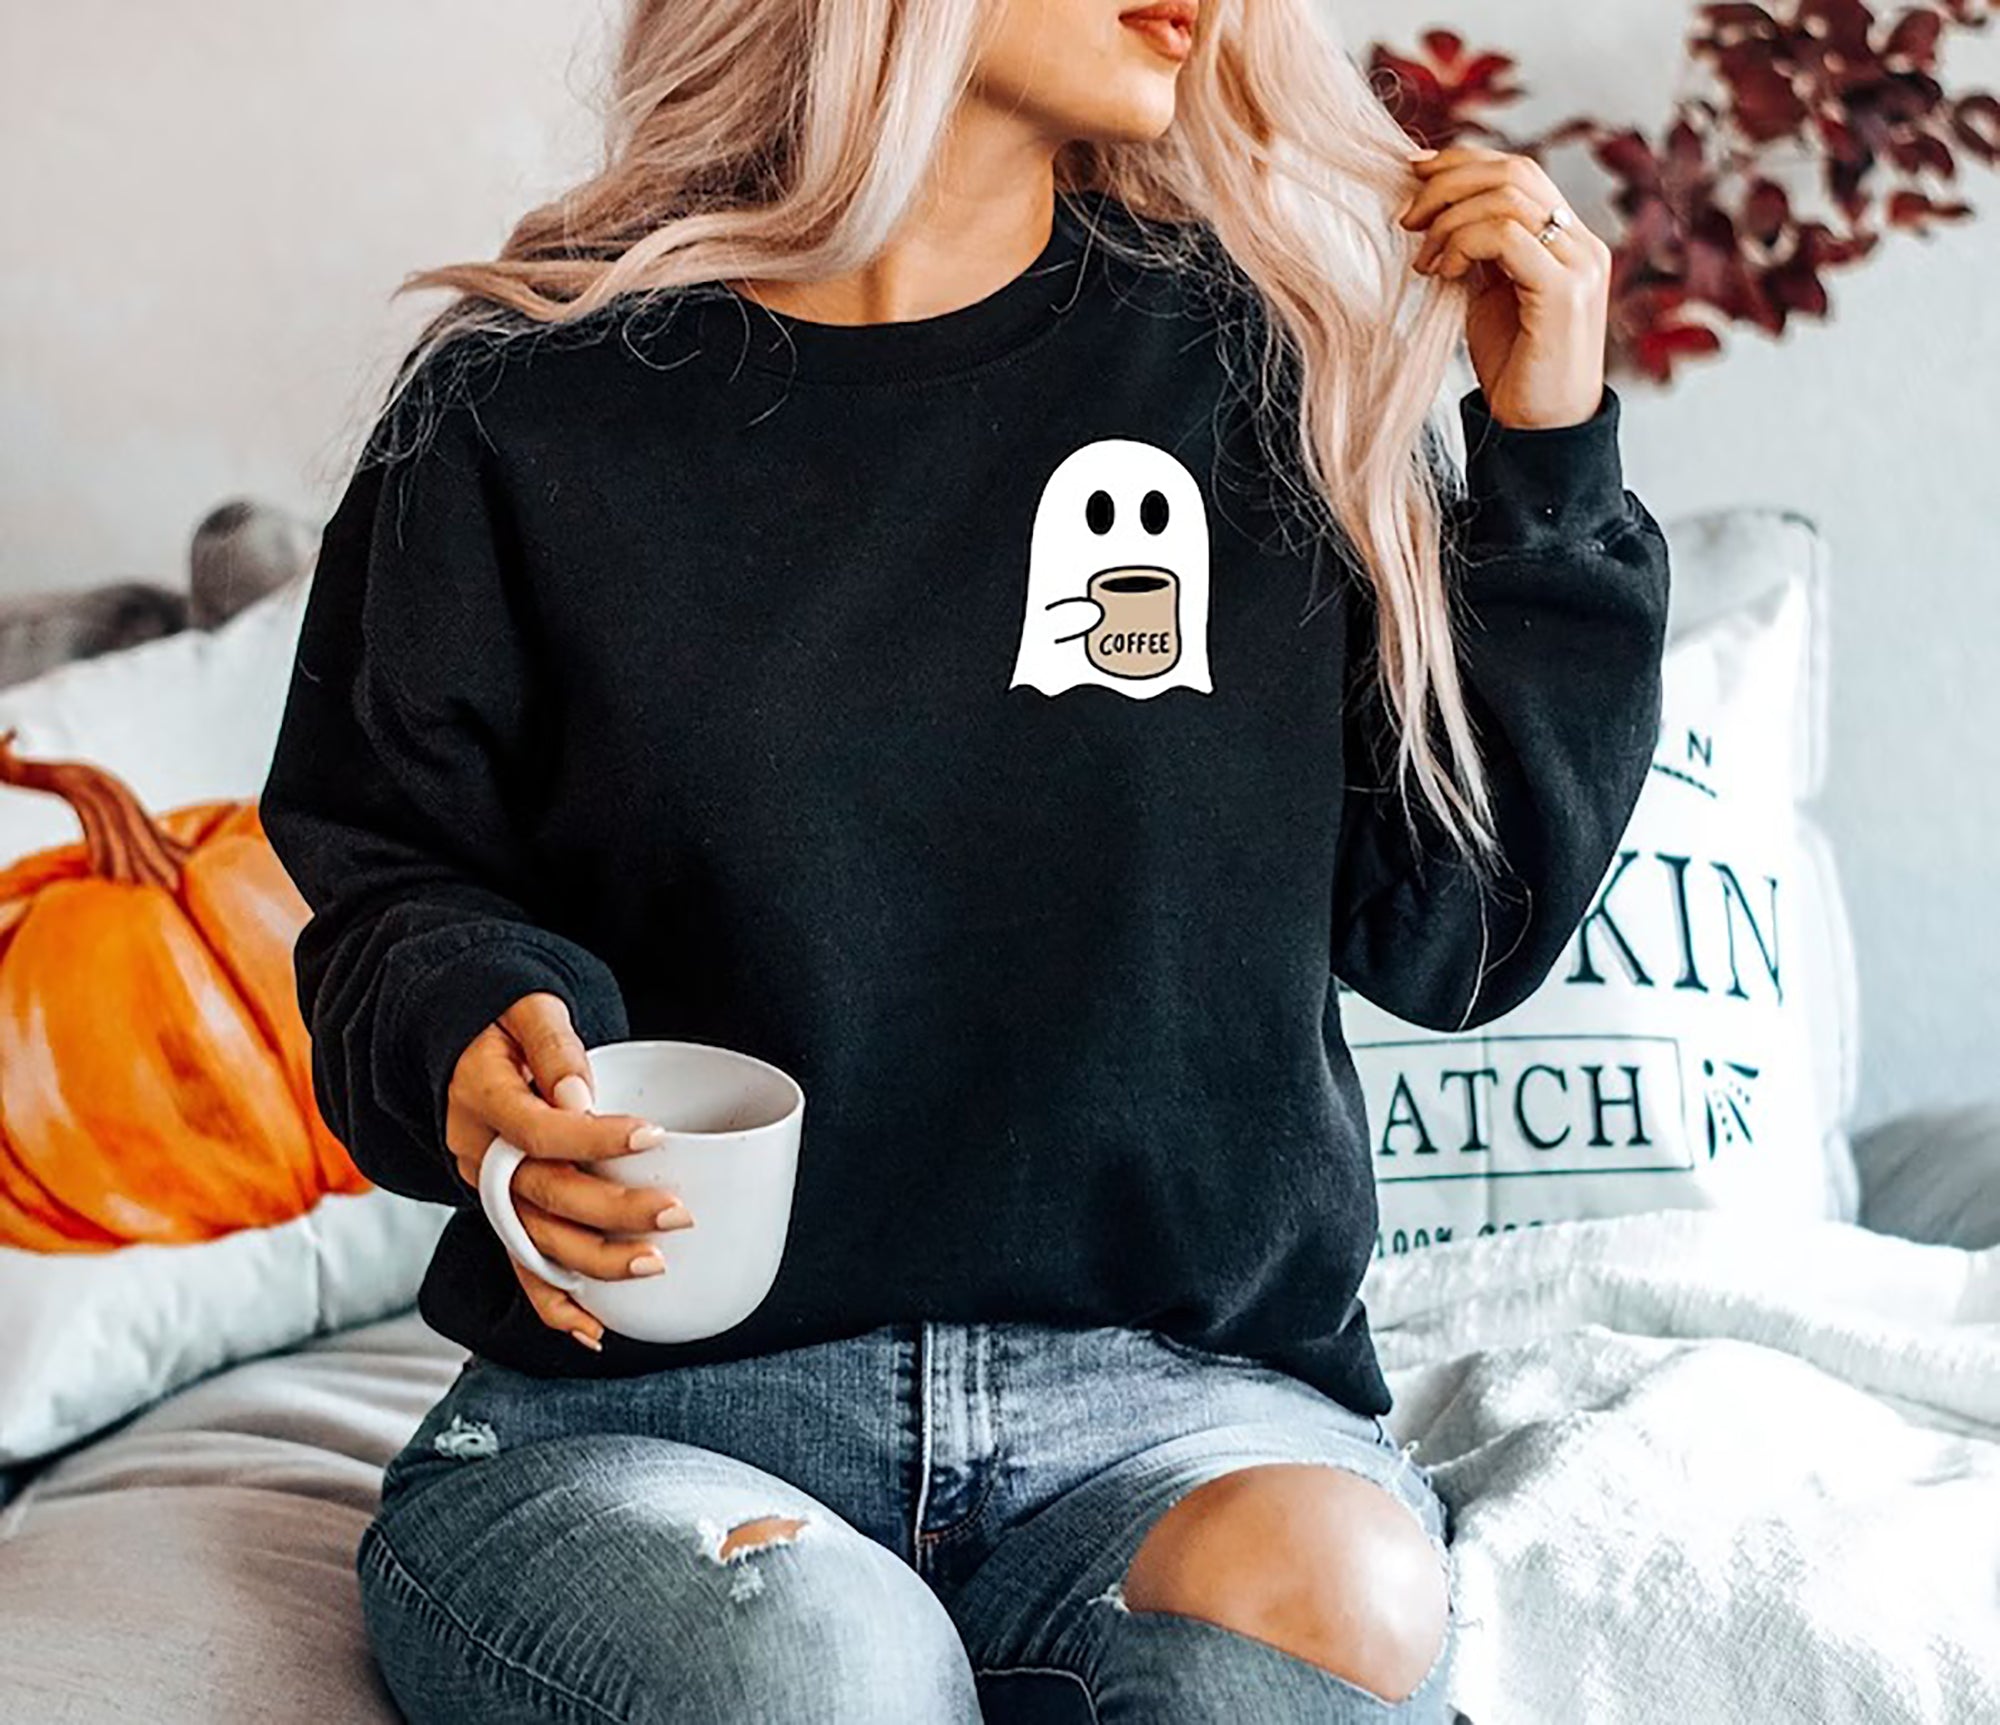 Skitongift Little Ghost Ice Coffee Shirt,Ghost T-Shirt,Little Ghost Ice Coffee T-Shirt,Halloween Tee,Cute Ghost Shirt,Ghost Pocket Tee